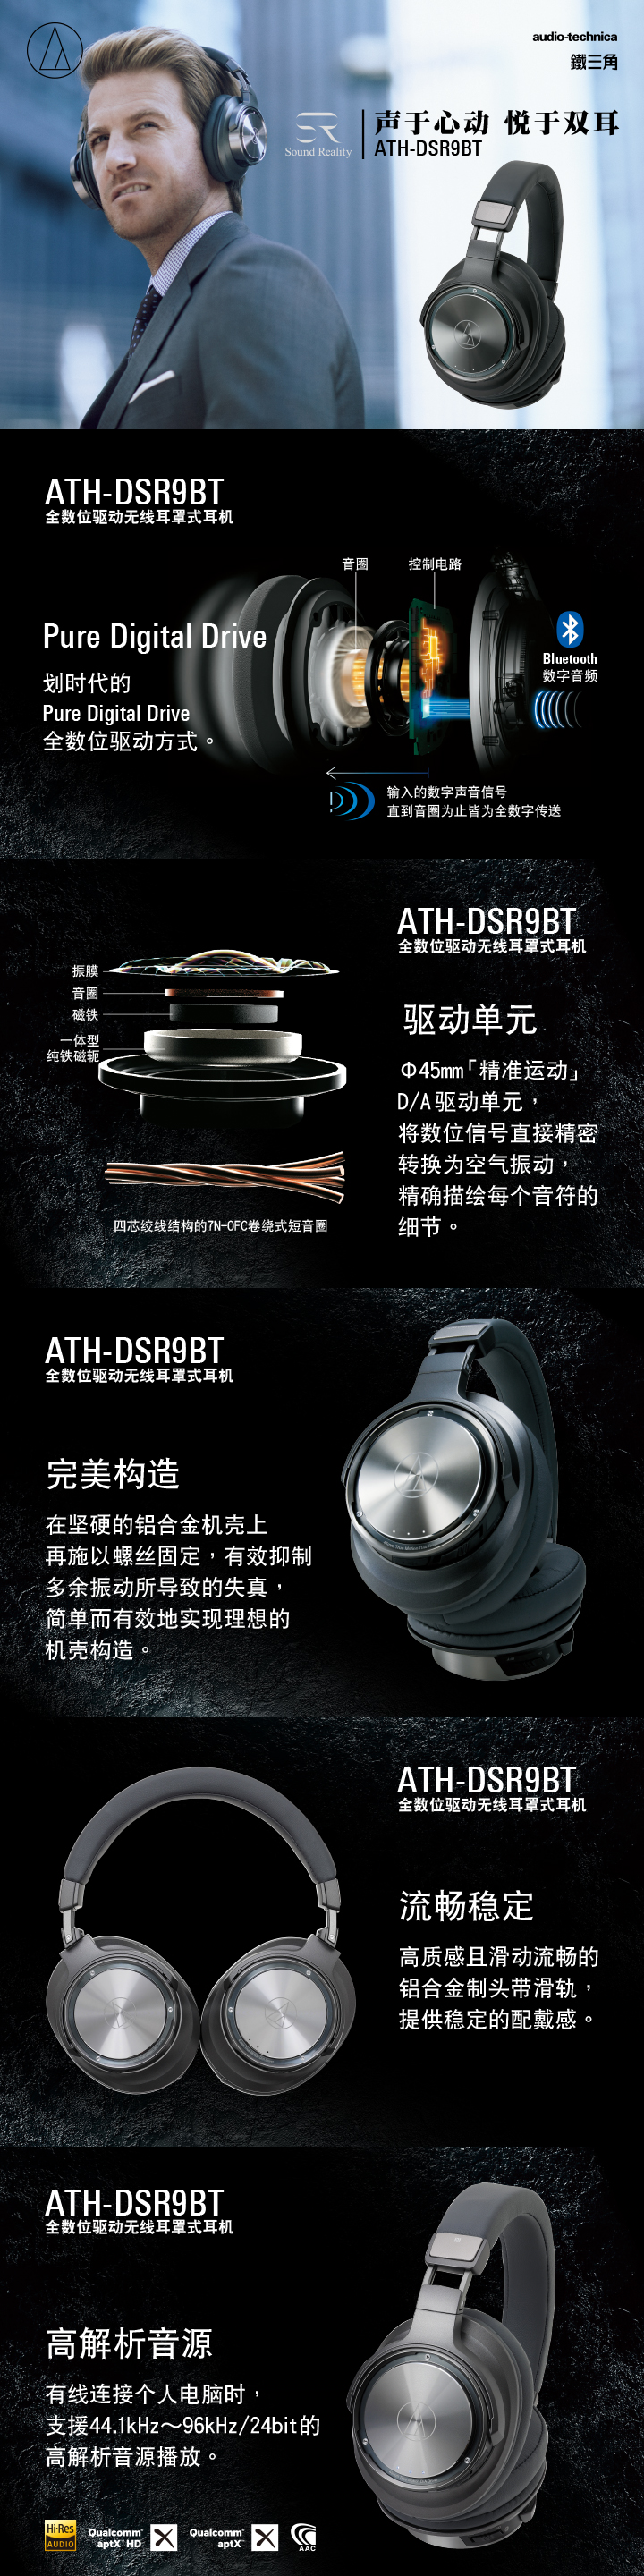 铁三角ATH-DSR9BT耳机